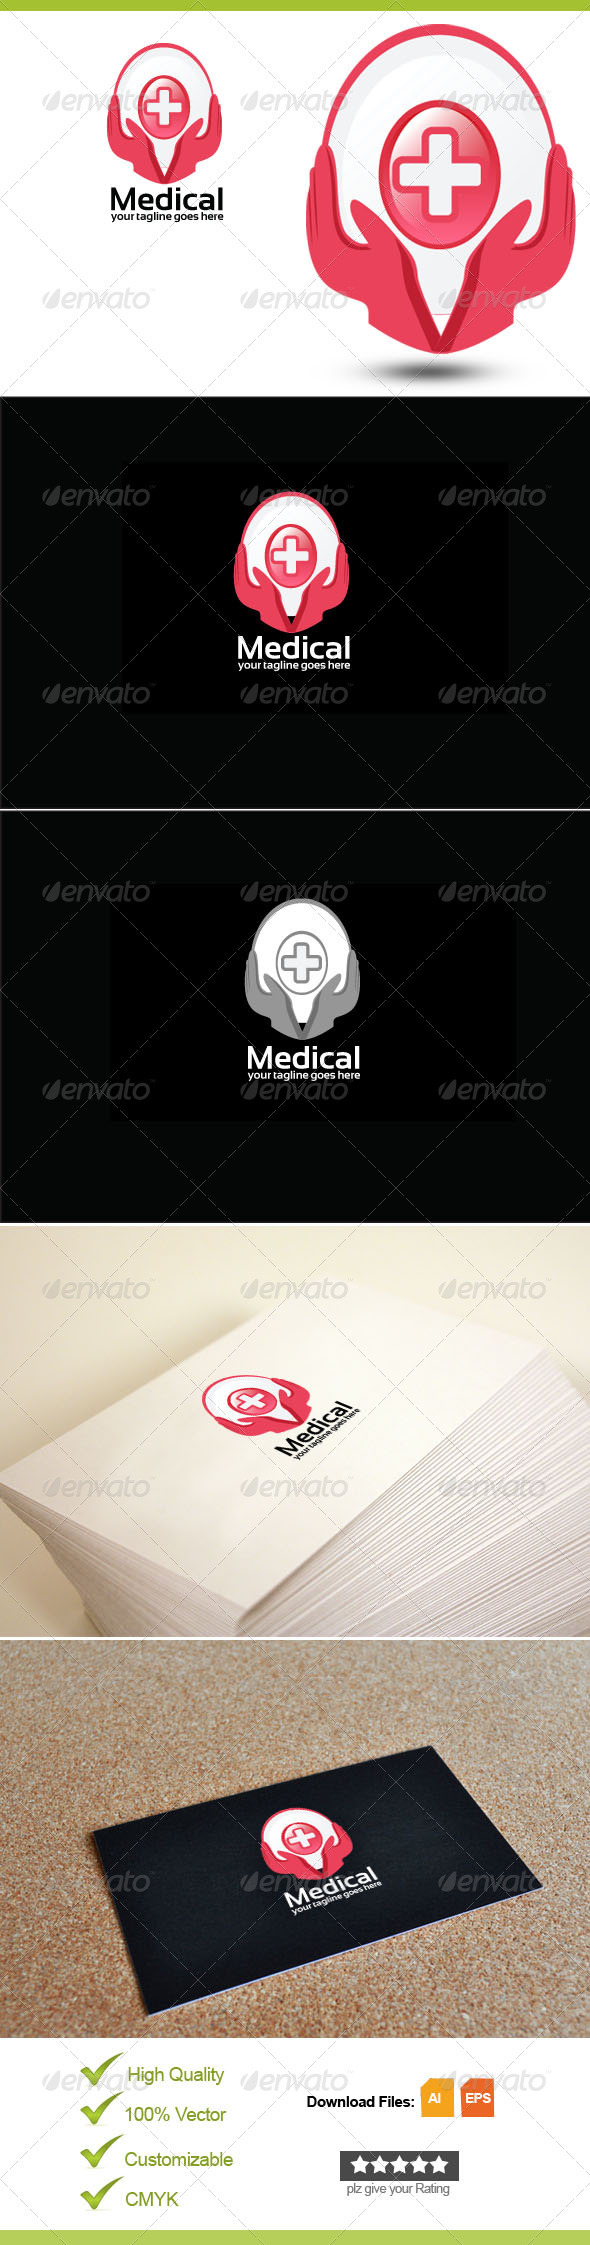 Health Care Medical Hospital Logo Template photo - 1